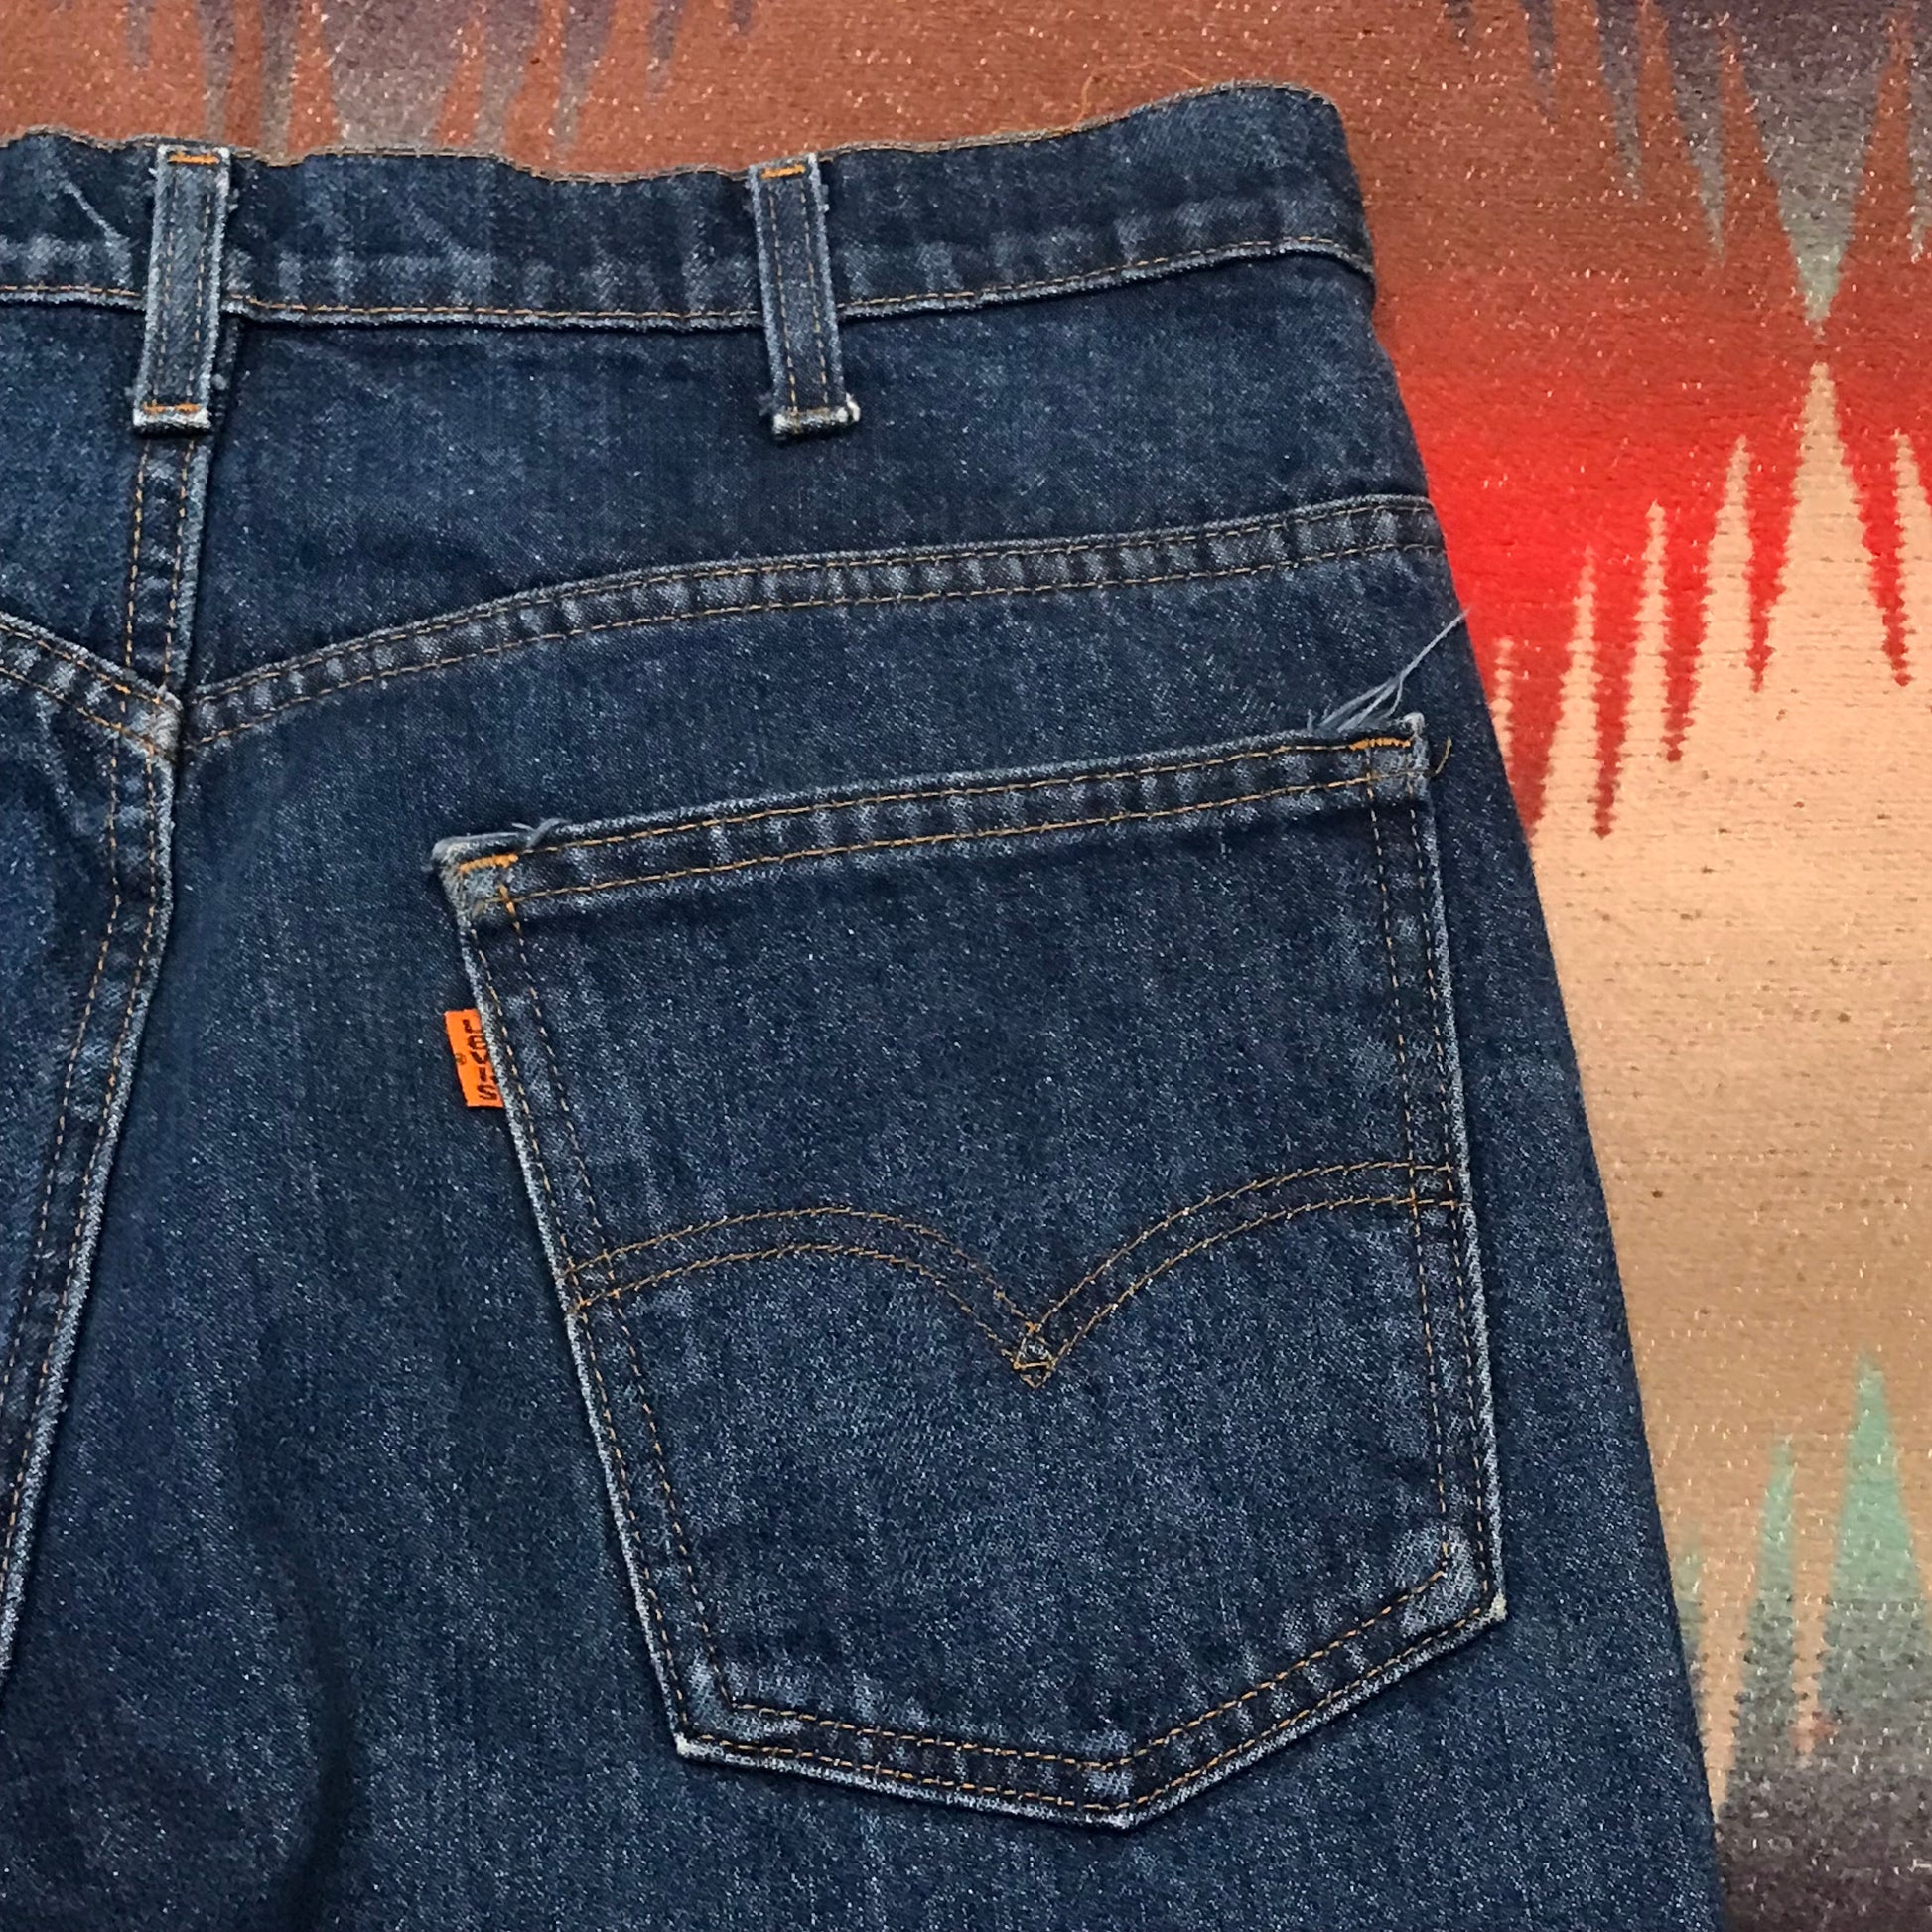 1980s Levi's 517 Dark Blue Denim Jeans Made in USA Size 34x31